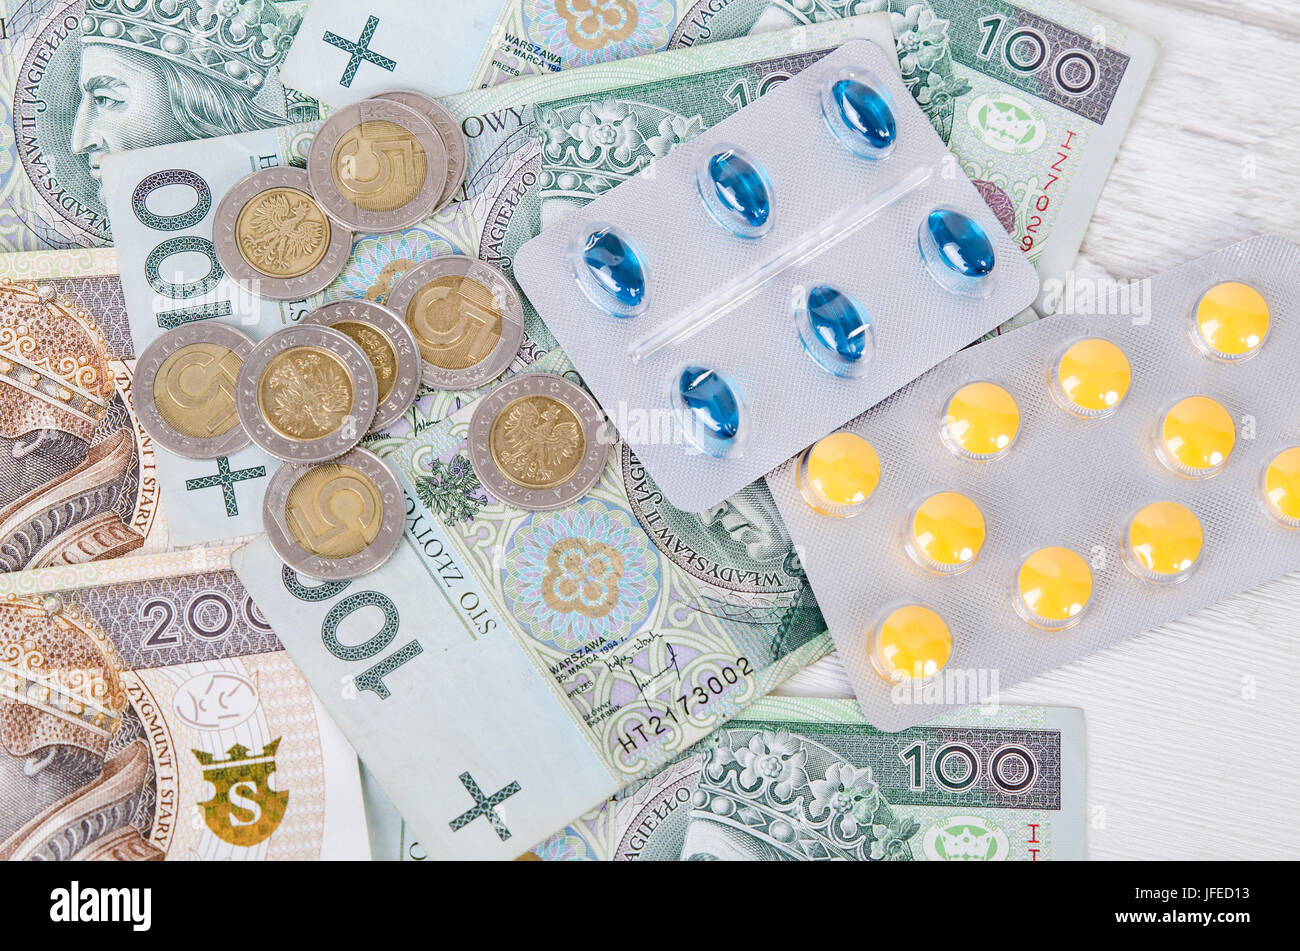 Pills and polish zloty bills. medicine pills health cost polish money zloty pln concept Stock Photo